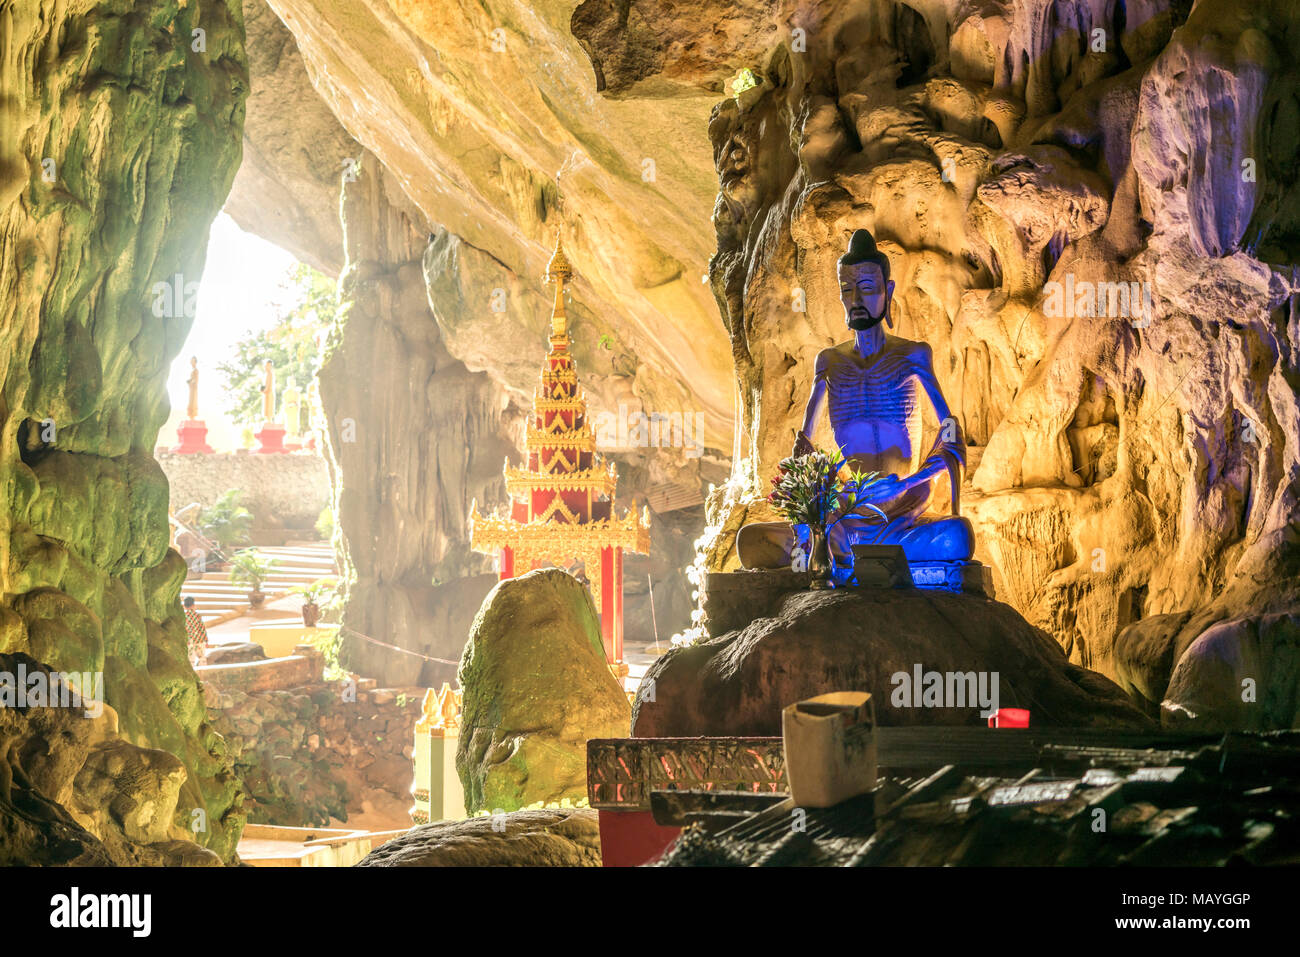 Beleuchtete Statua in der Saddan-Höhle, di Hpa-an, Myanmar, Asien | statua illuminata, Saddar grotta, di Hpa-an, Myanmar, Asia Foto Stock